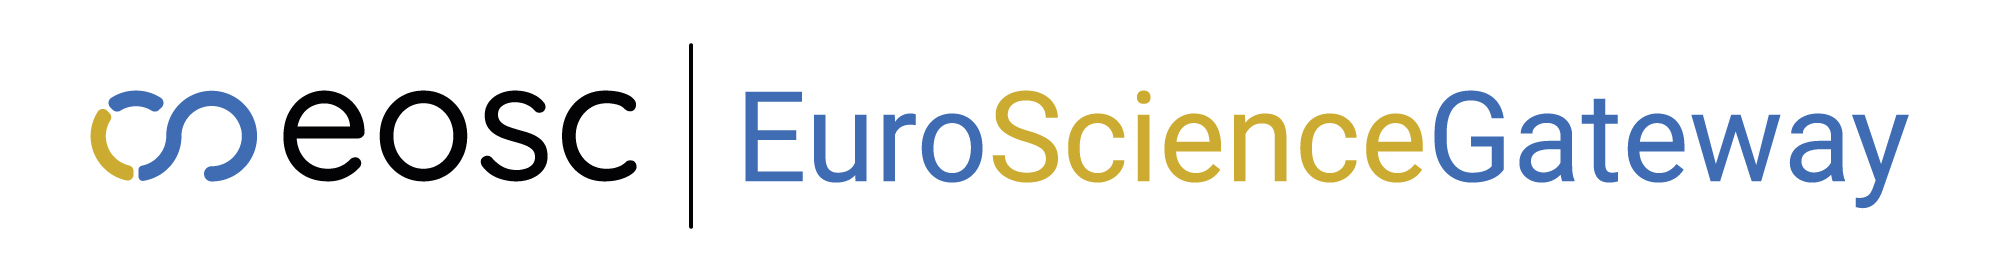 EuroScienceGateway